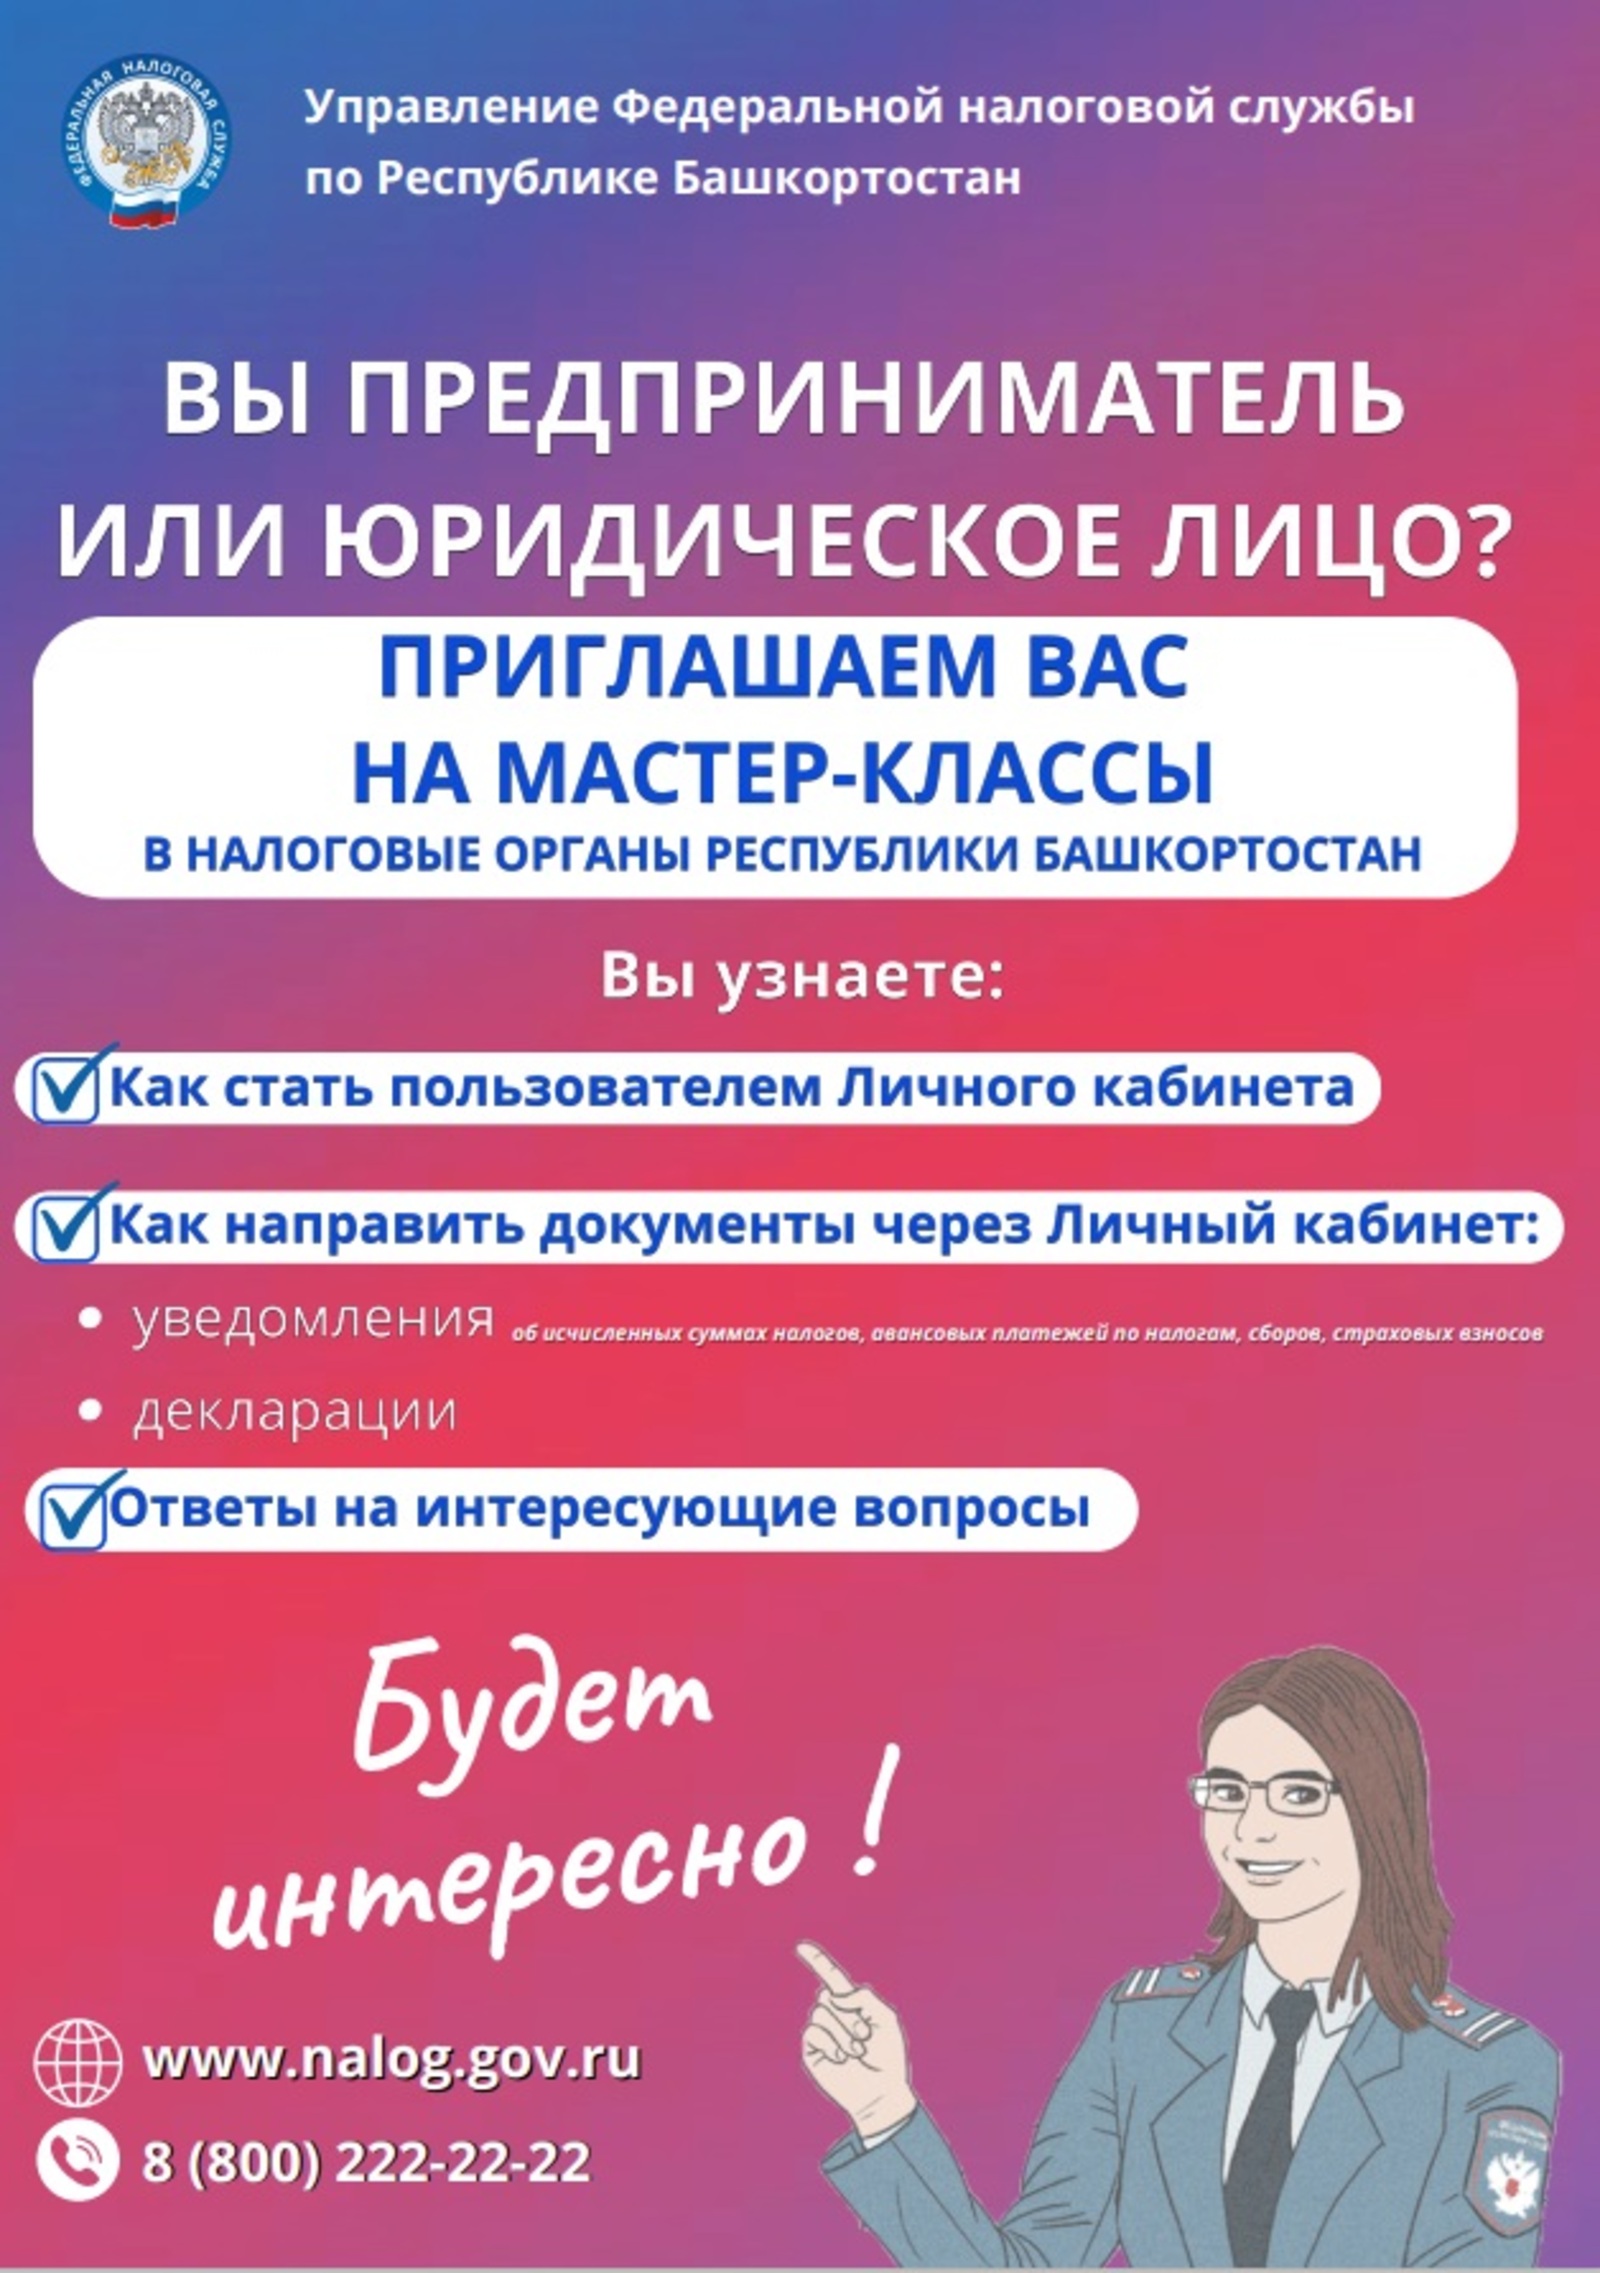 Налоговые органы Башкортостана приглашают на мастер-классы